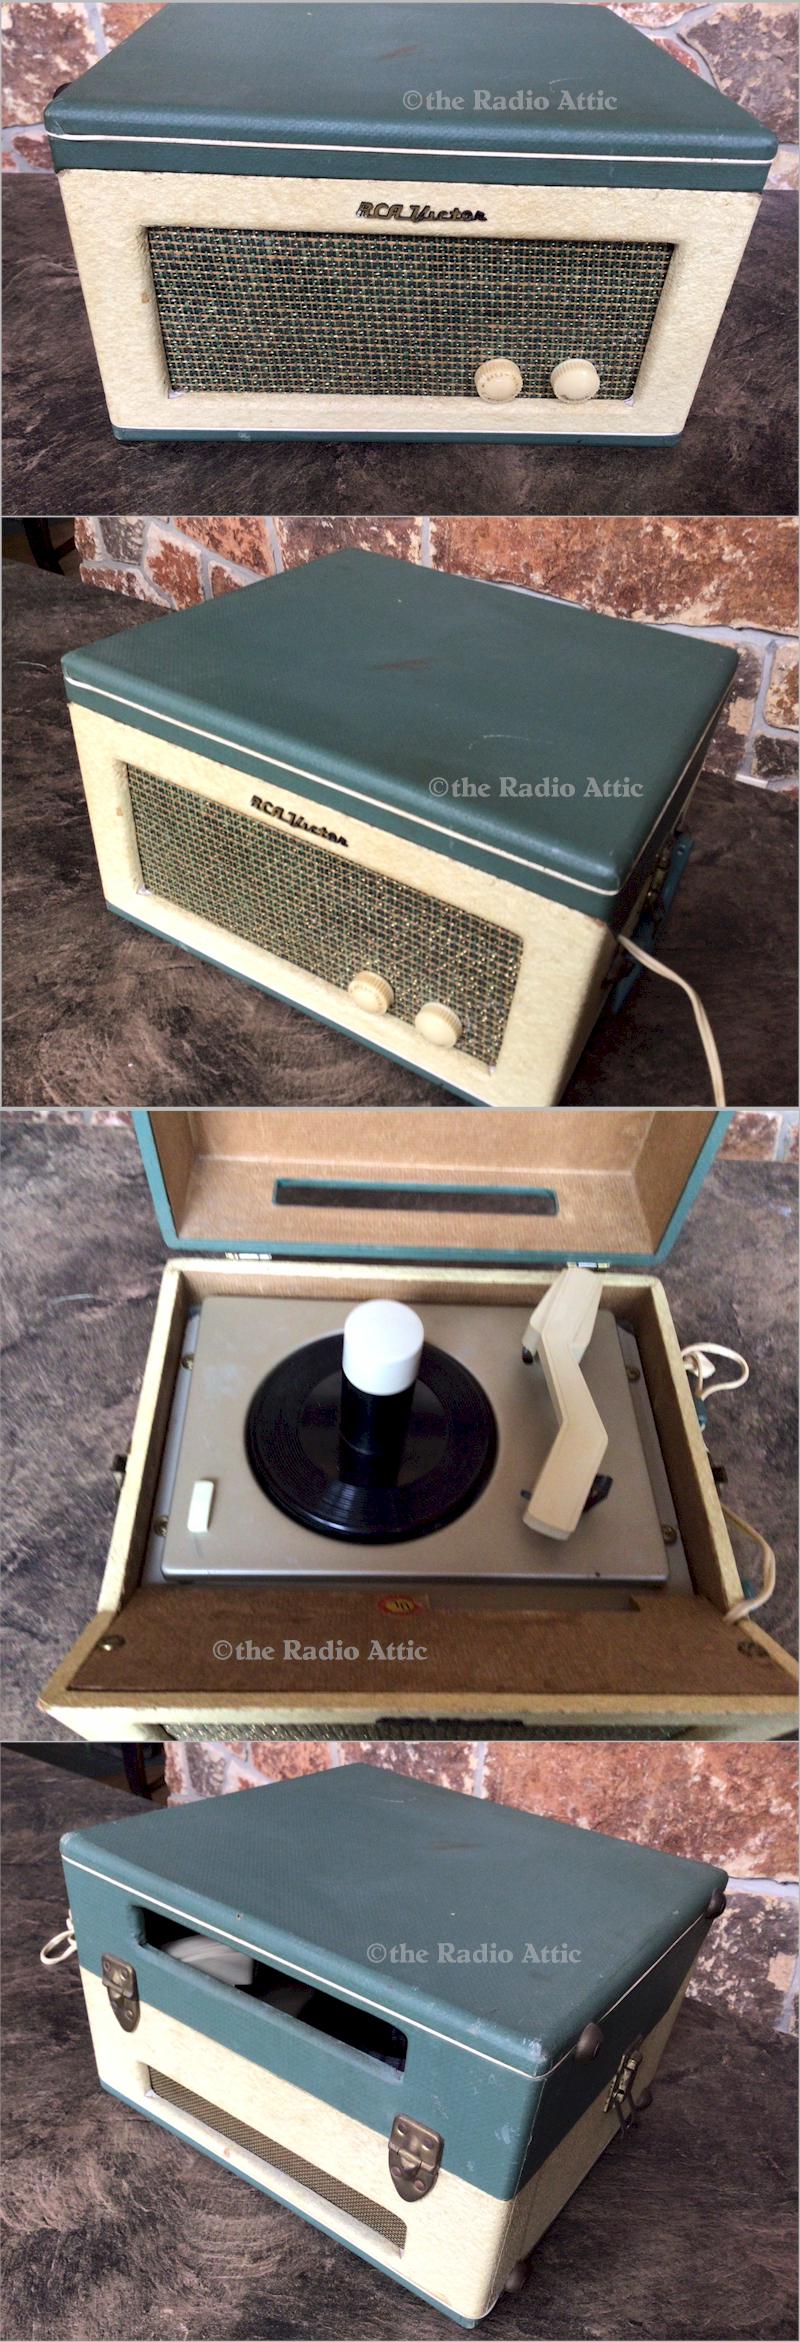 RCA Phono (1950s)